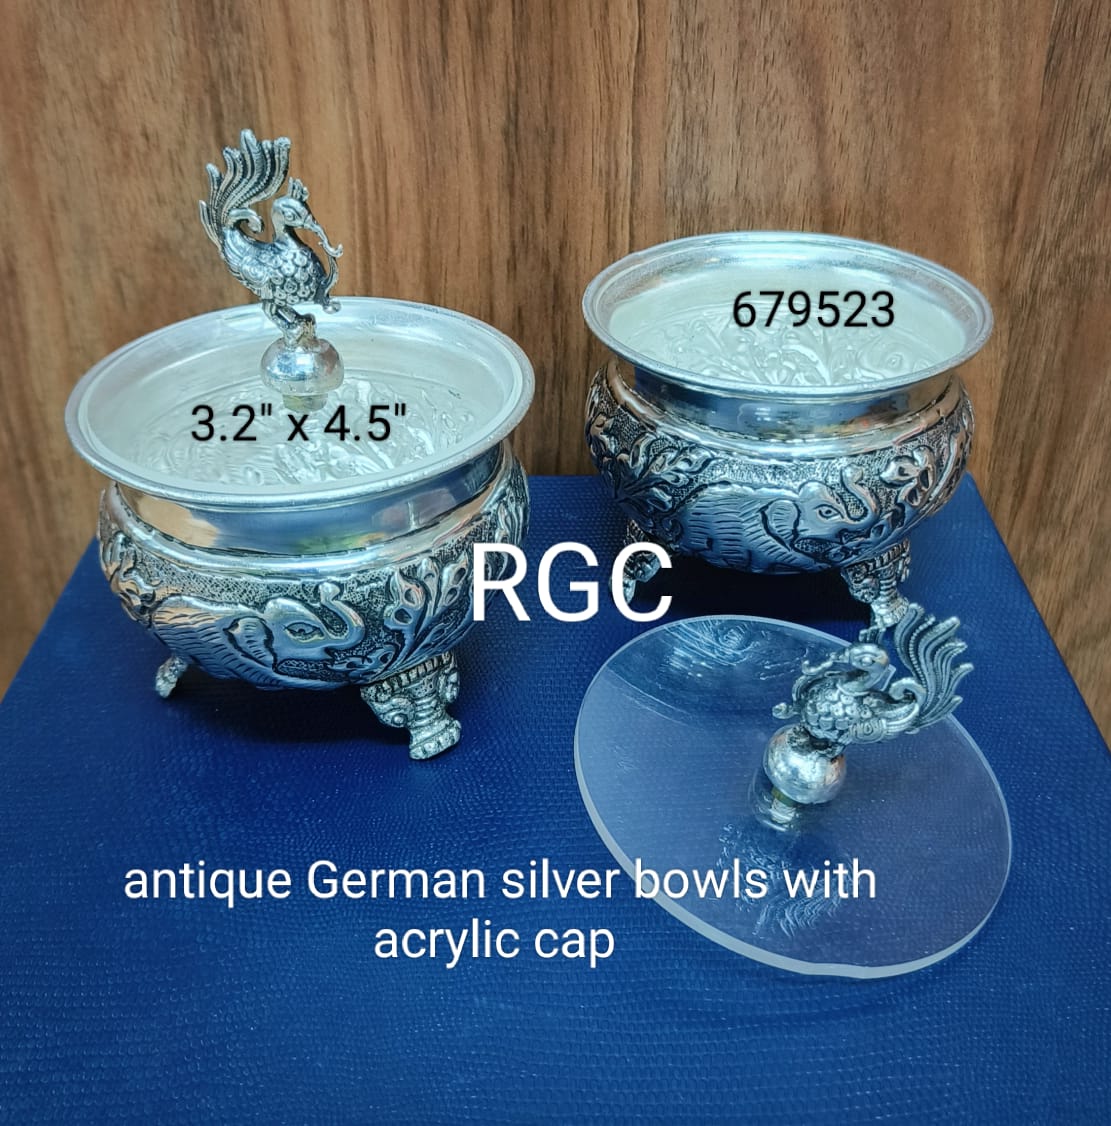 Antique German silver bowls with acrylic cap